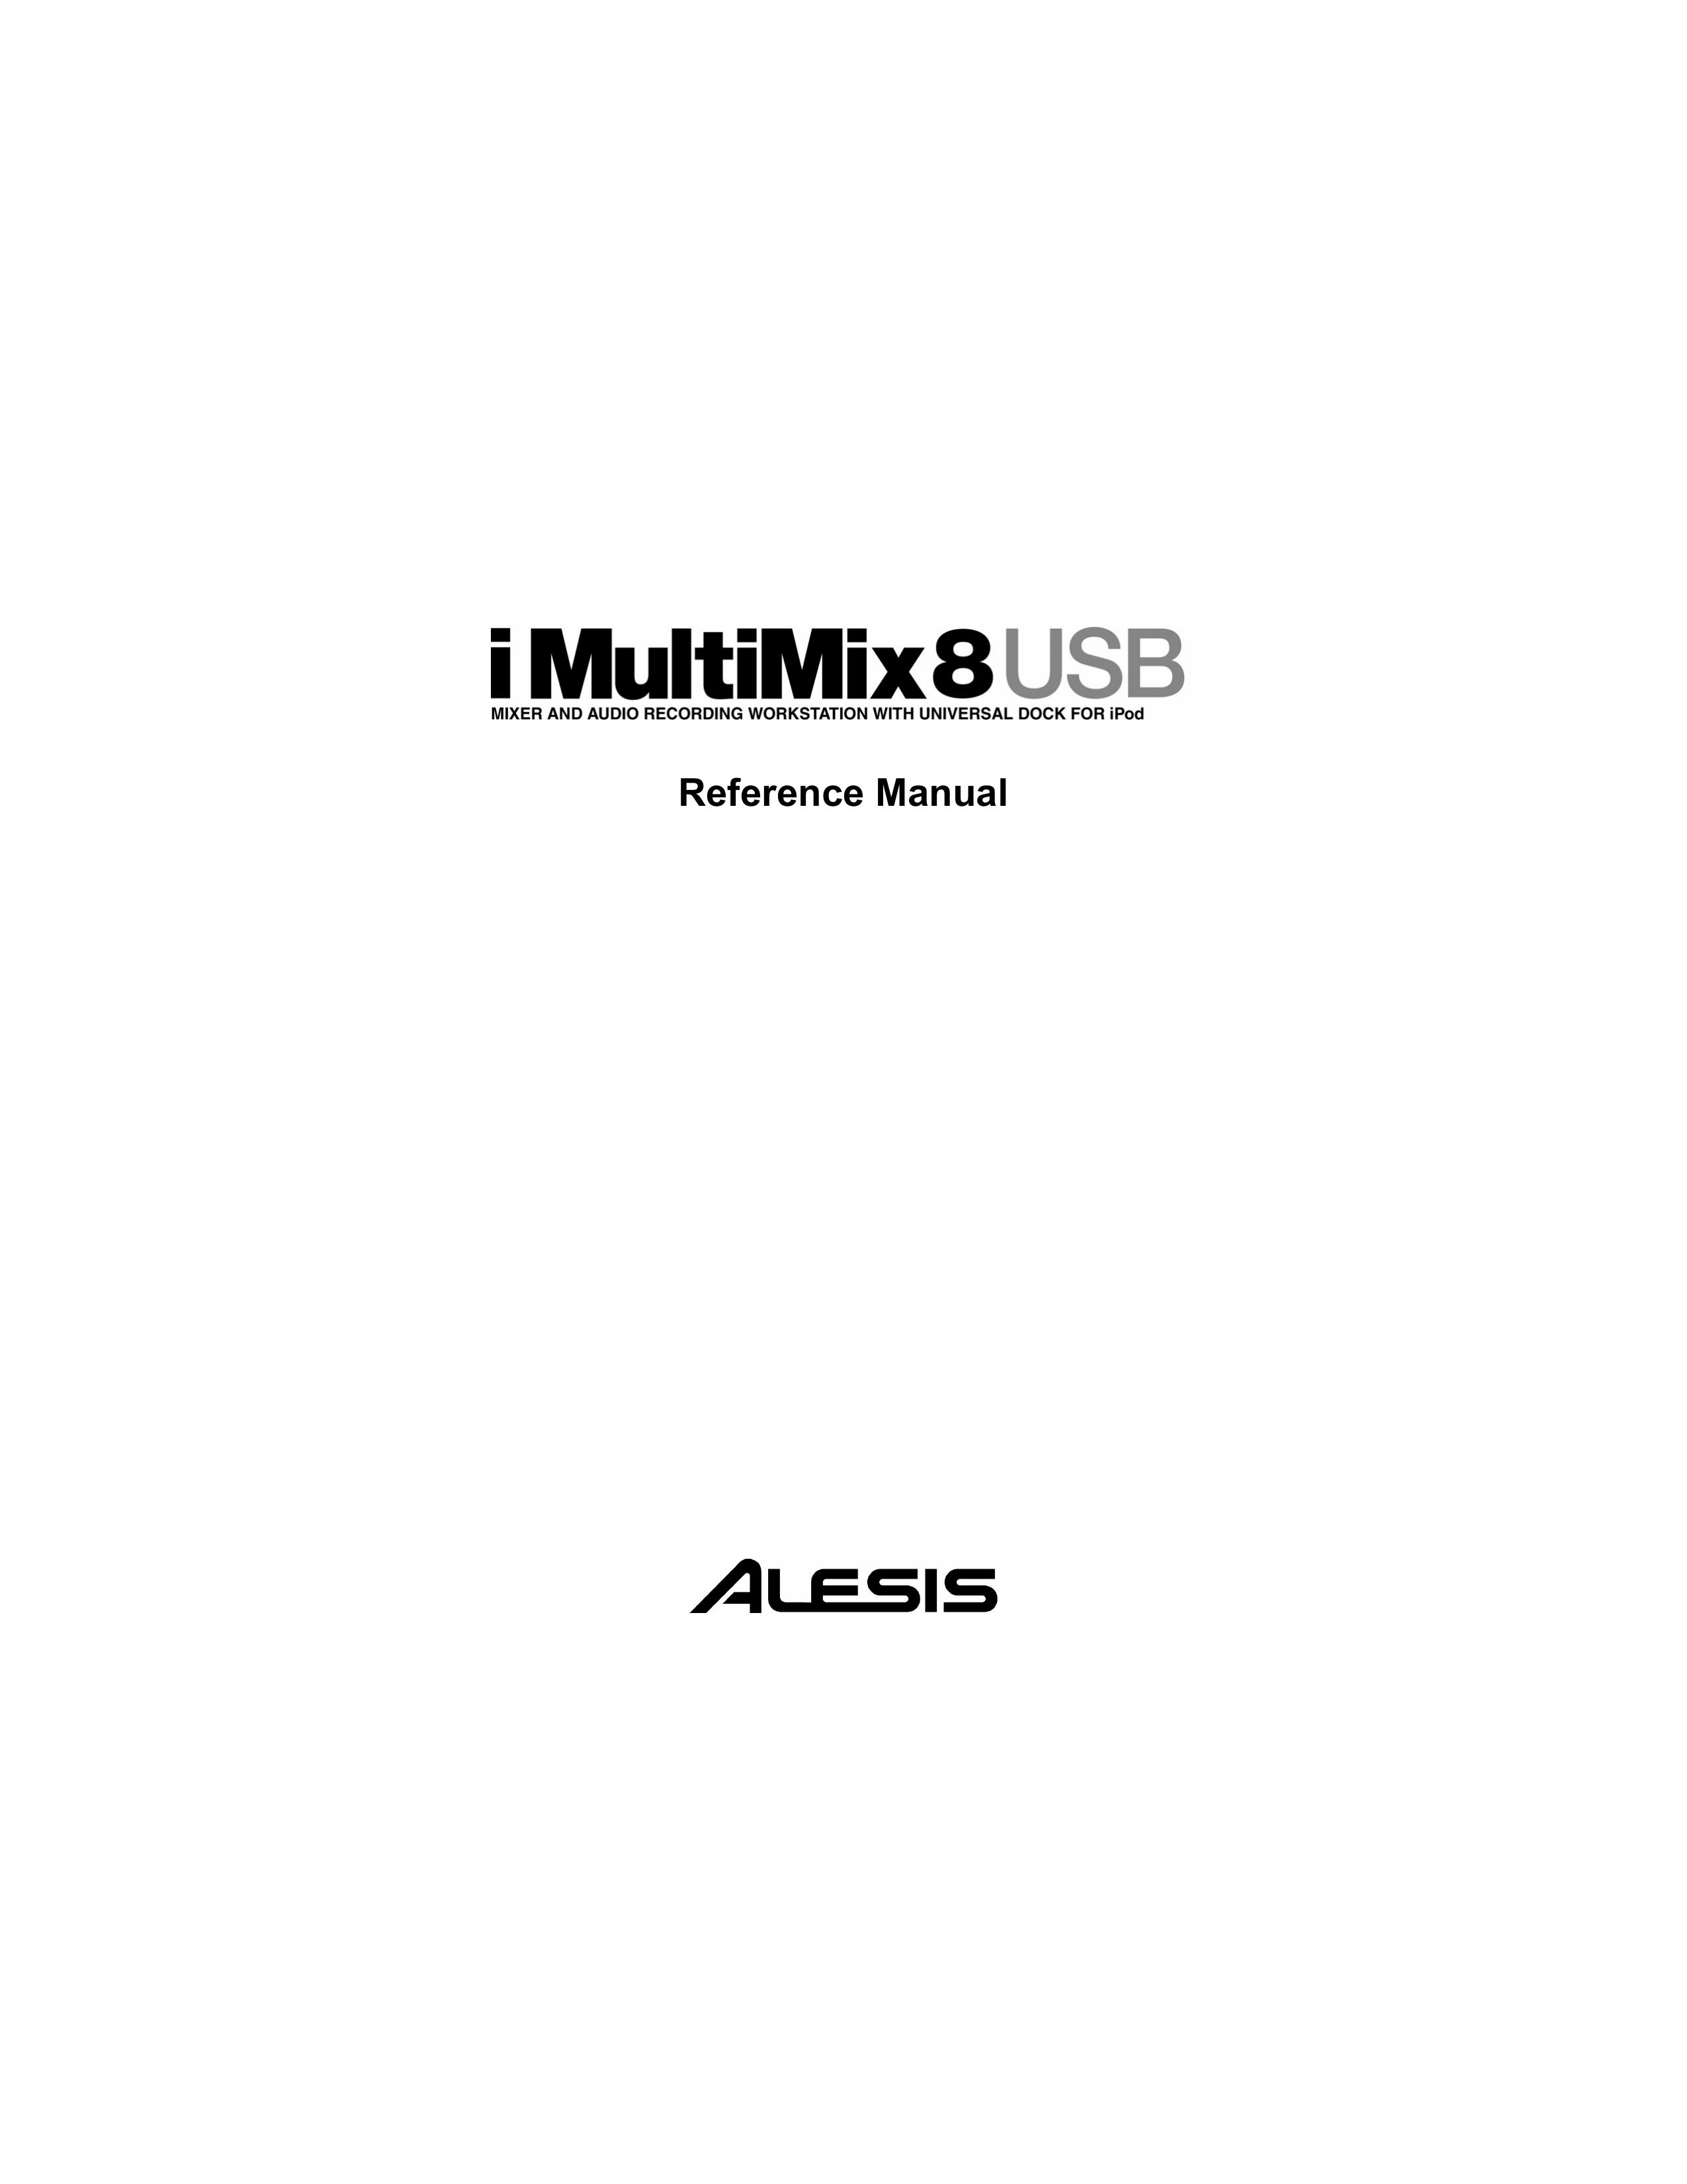 Alesis iMultiMix 8 USB Musical Instrument User Manual